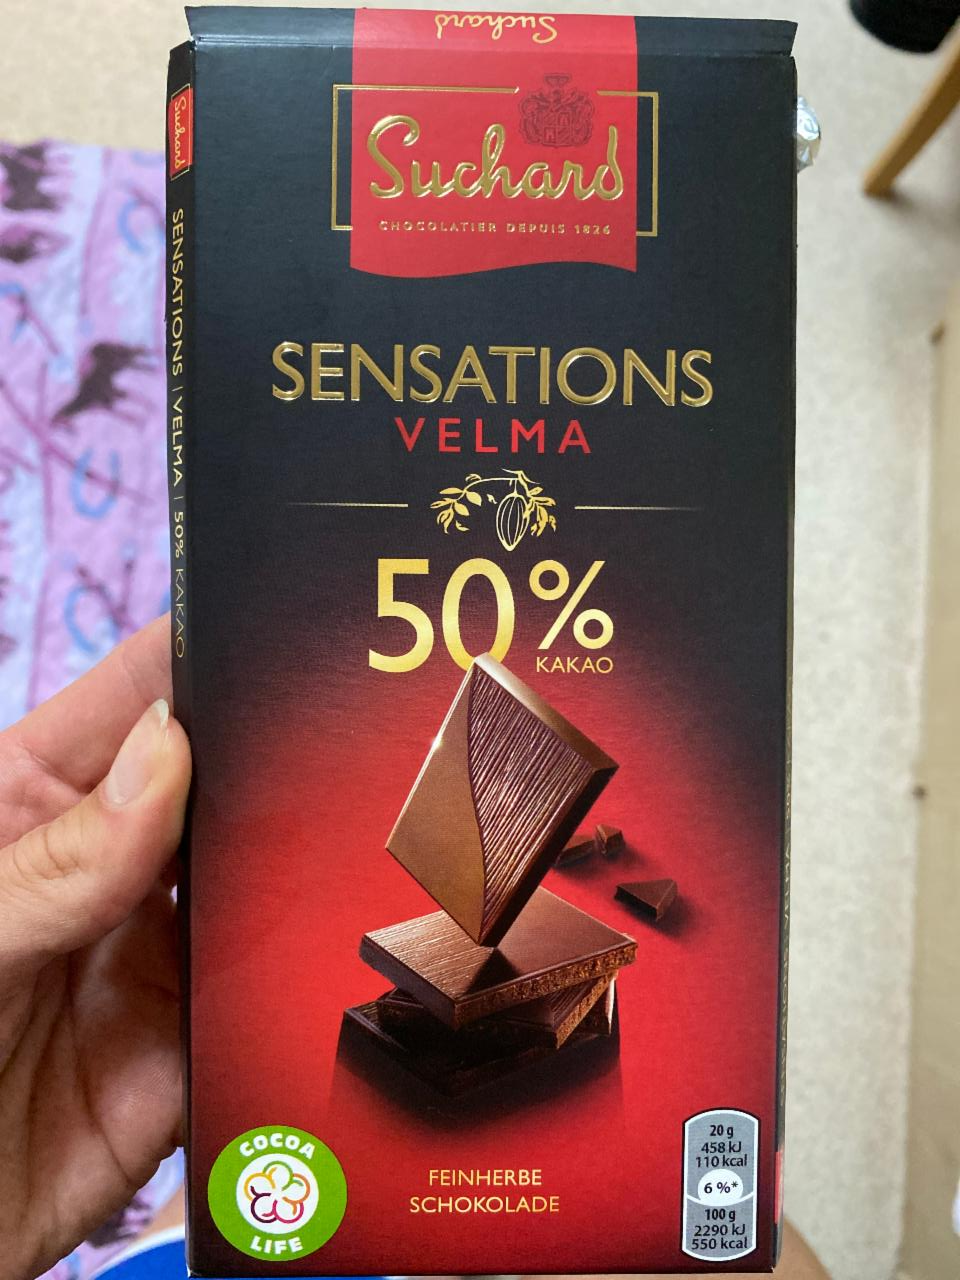 Fotografie - suchard sensations velma 50% kakao feonherbe schokolade